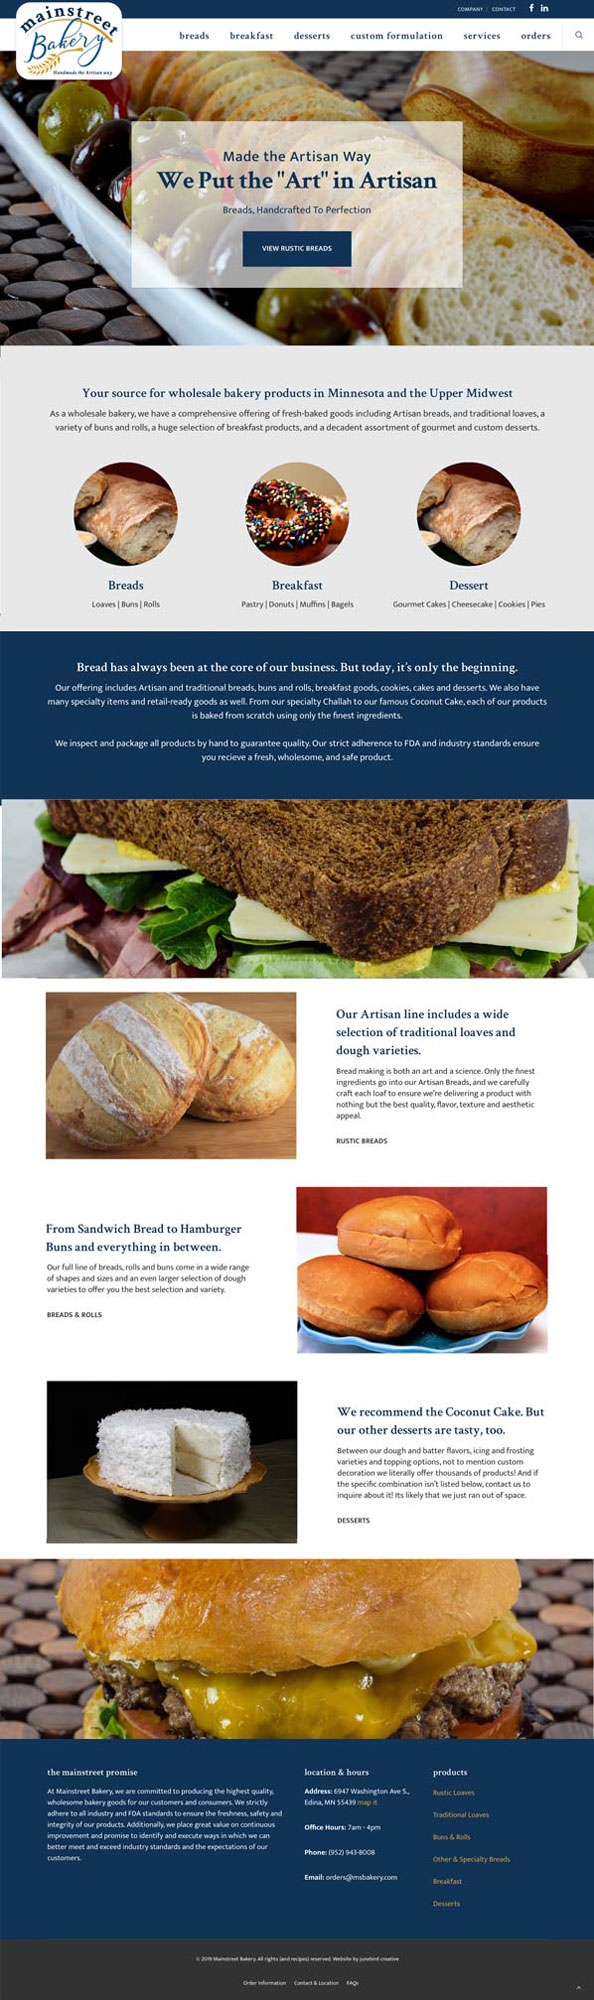 Mainstreet Bakery website redesign